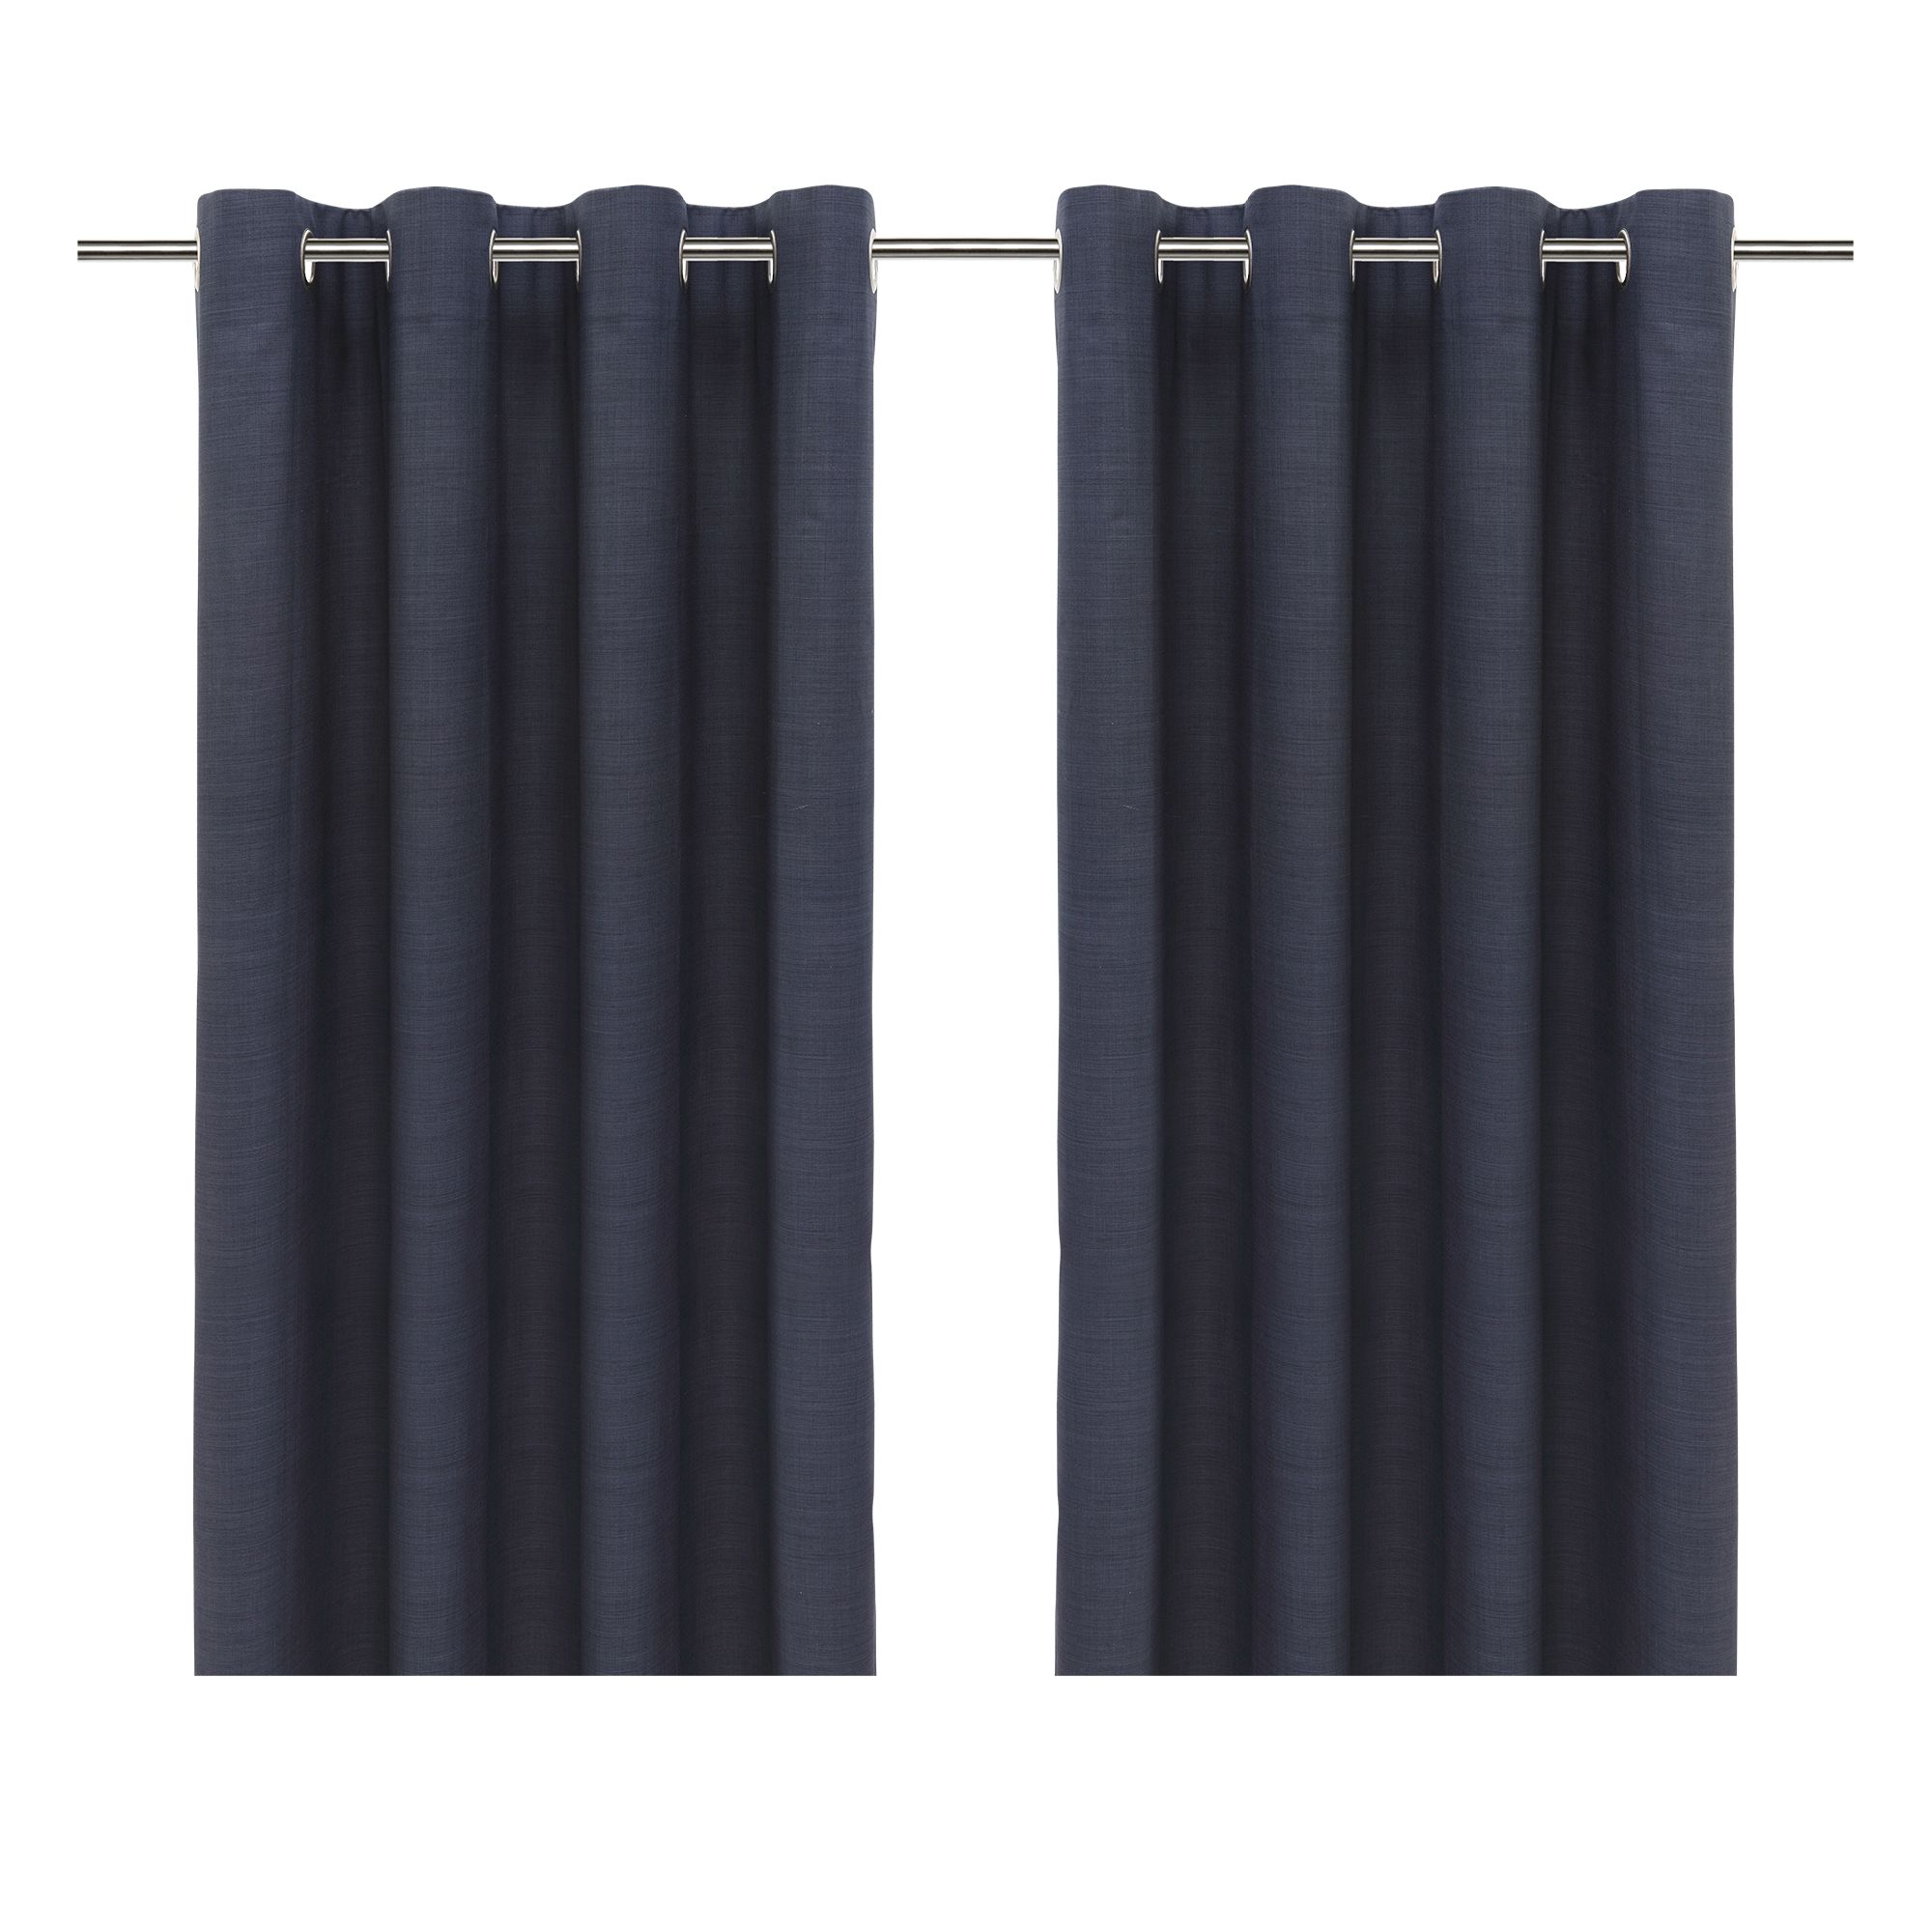 Glend Navy Plain woven Blackout & thermal Eyelet Curtain (W)167cm (L)183cm, Pair